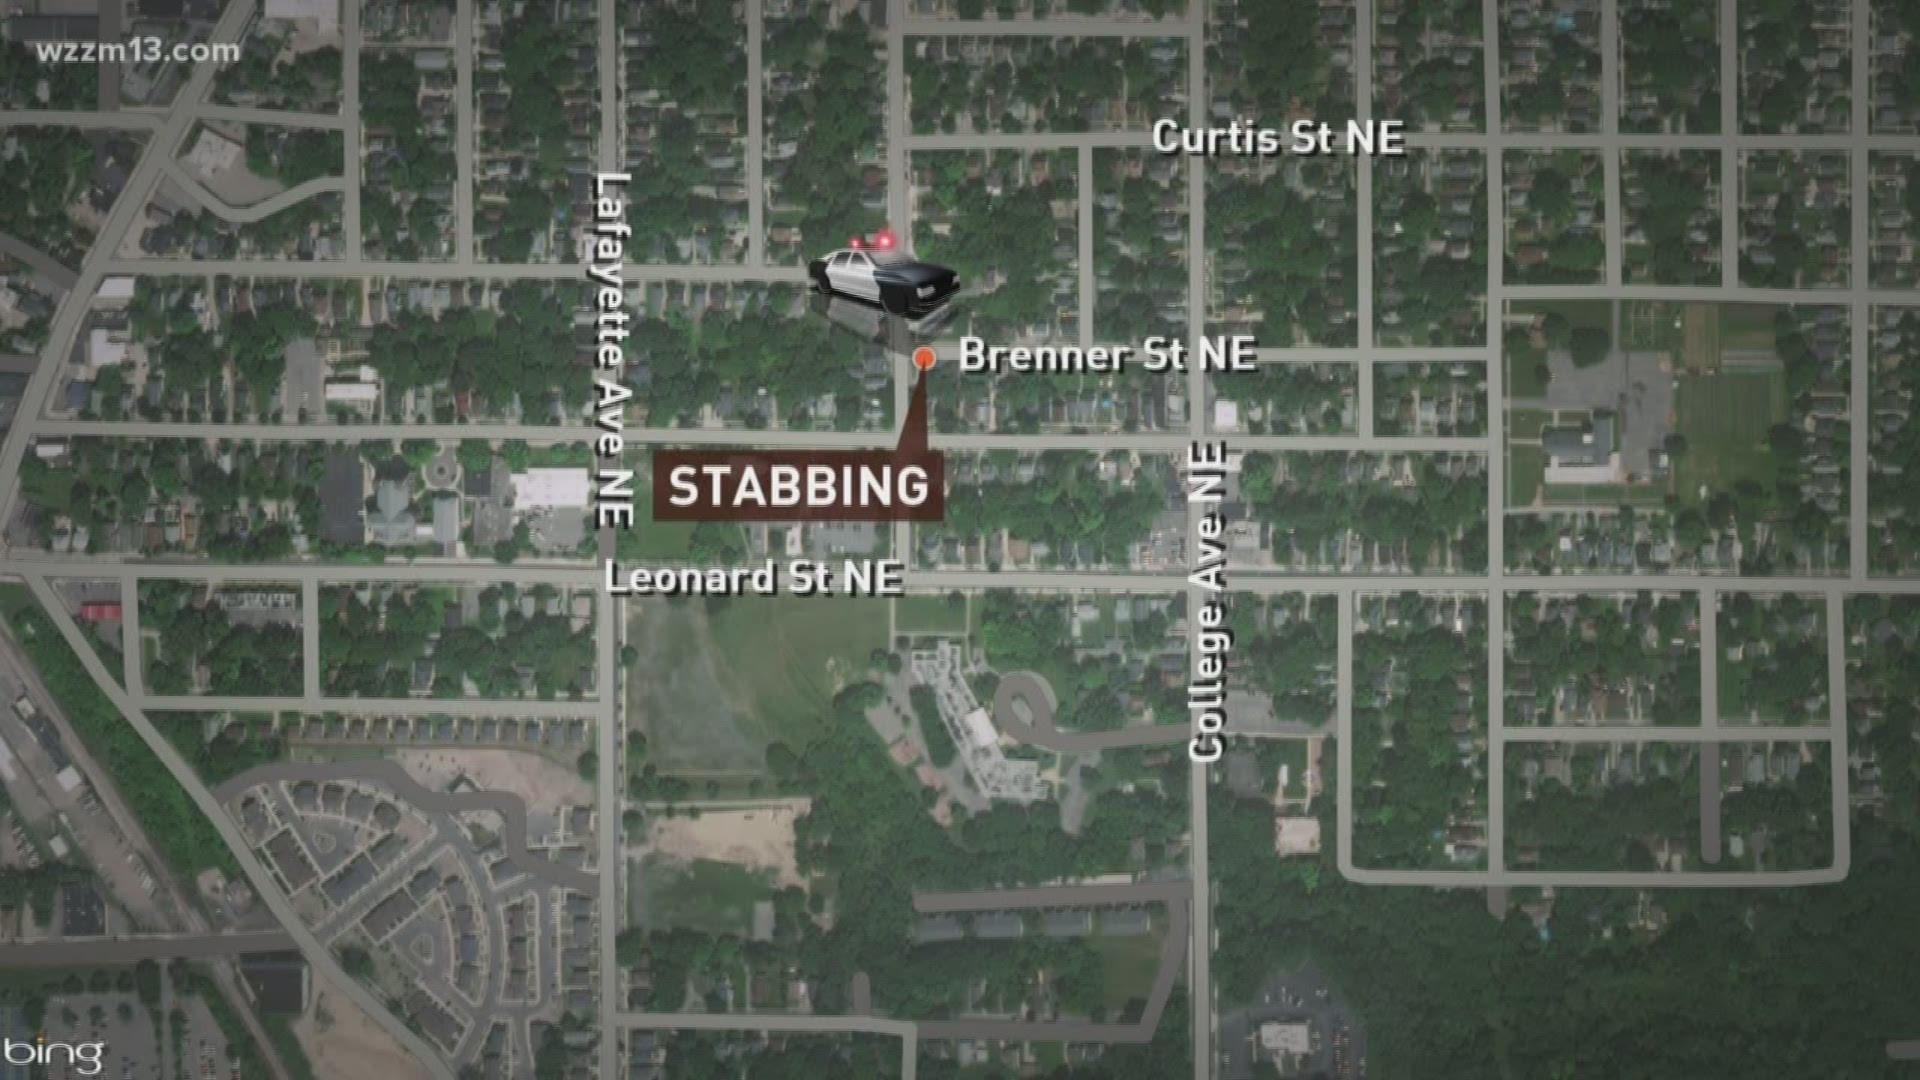 Suspect in custody in Grand Rapids stabbing